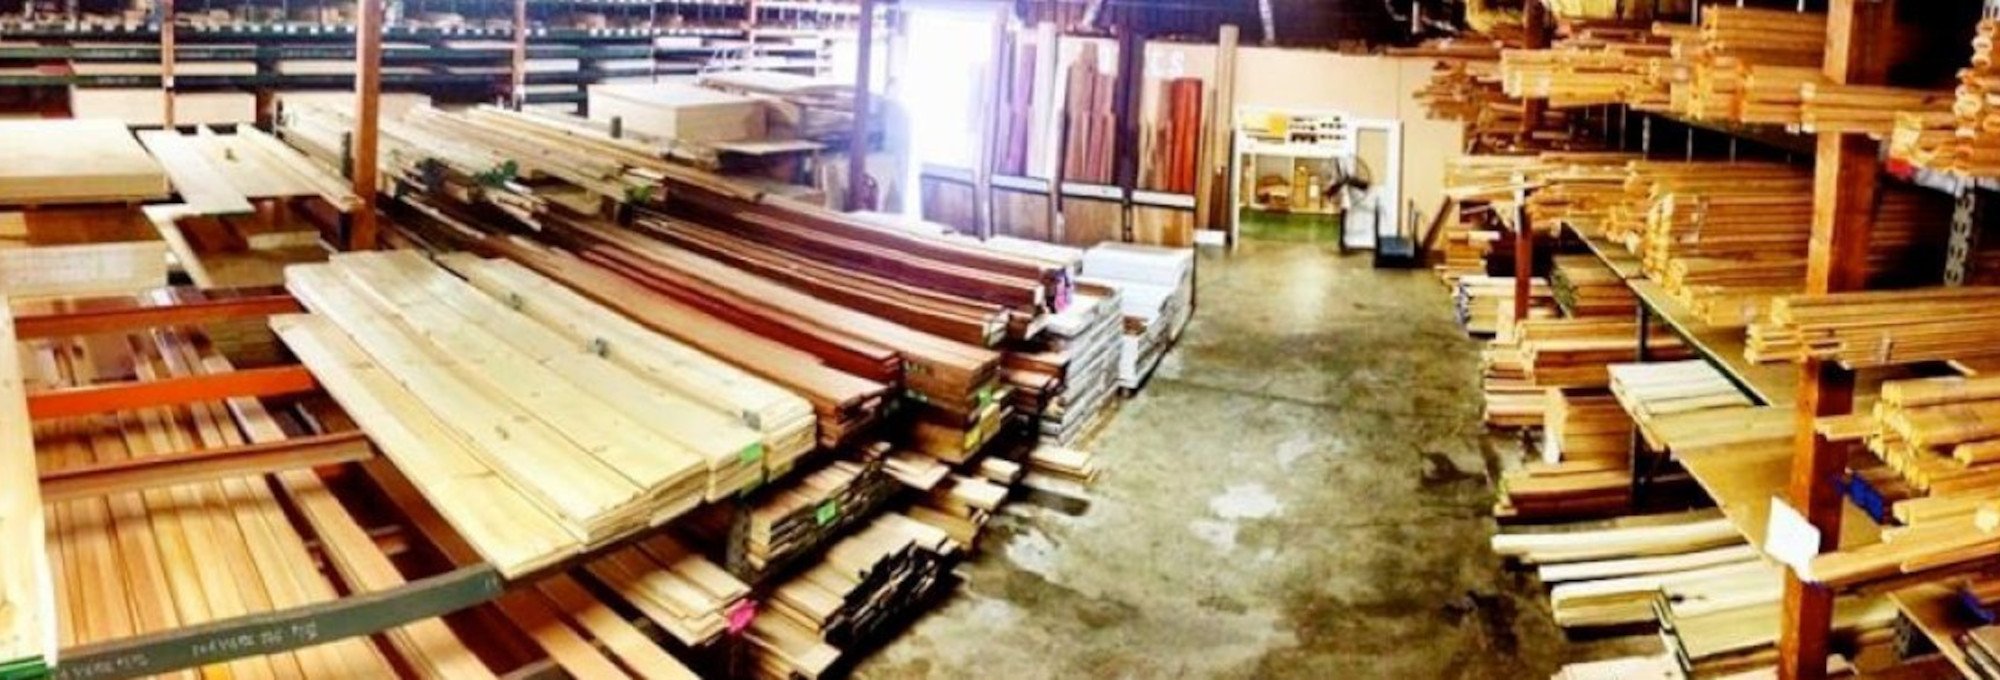 Storage area - Hughes Hardwoods in CA